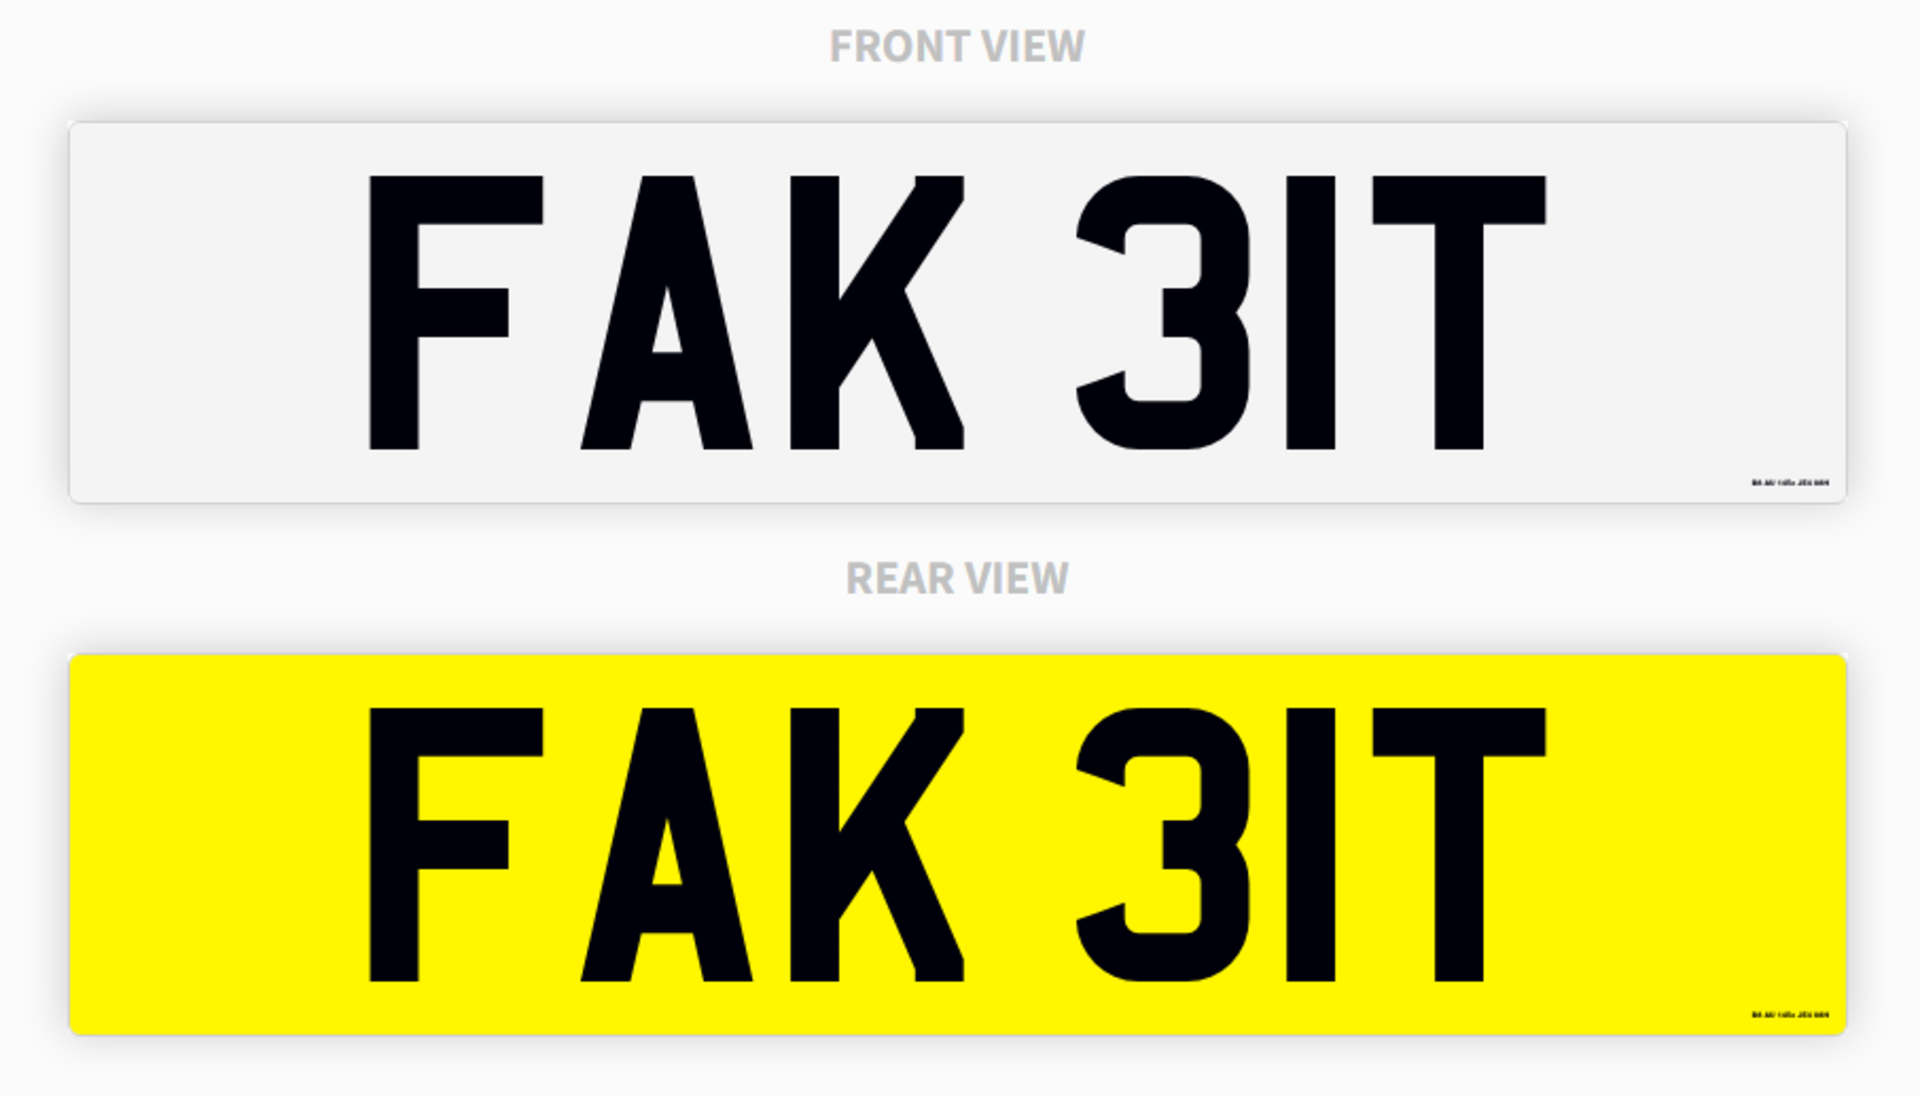 PRIVATE REGISTRATION "FAK 31T" - 'FAKE IT' *NO VAT*